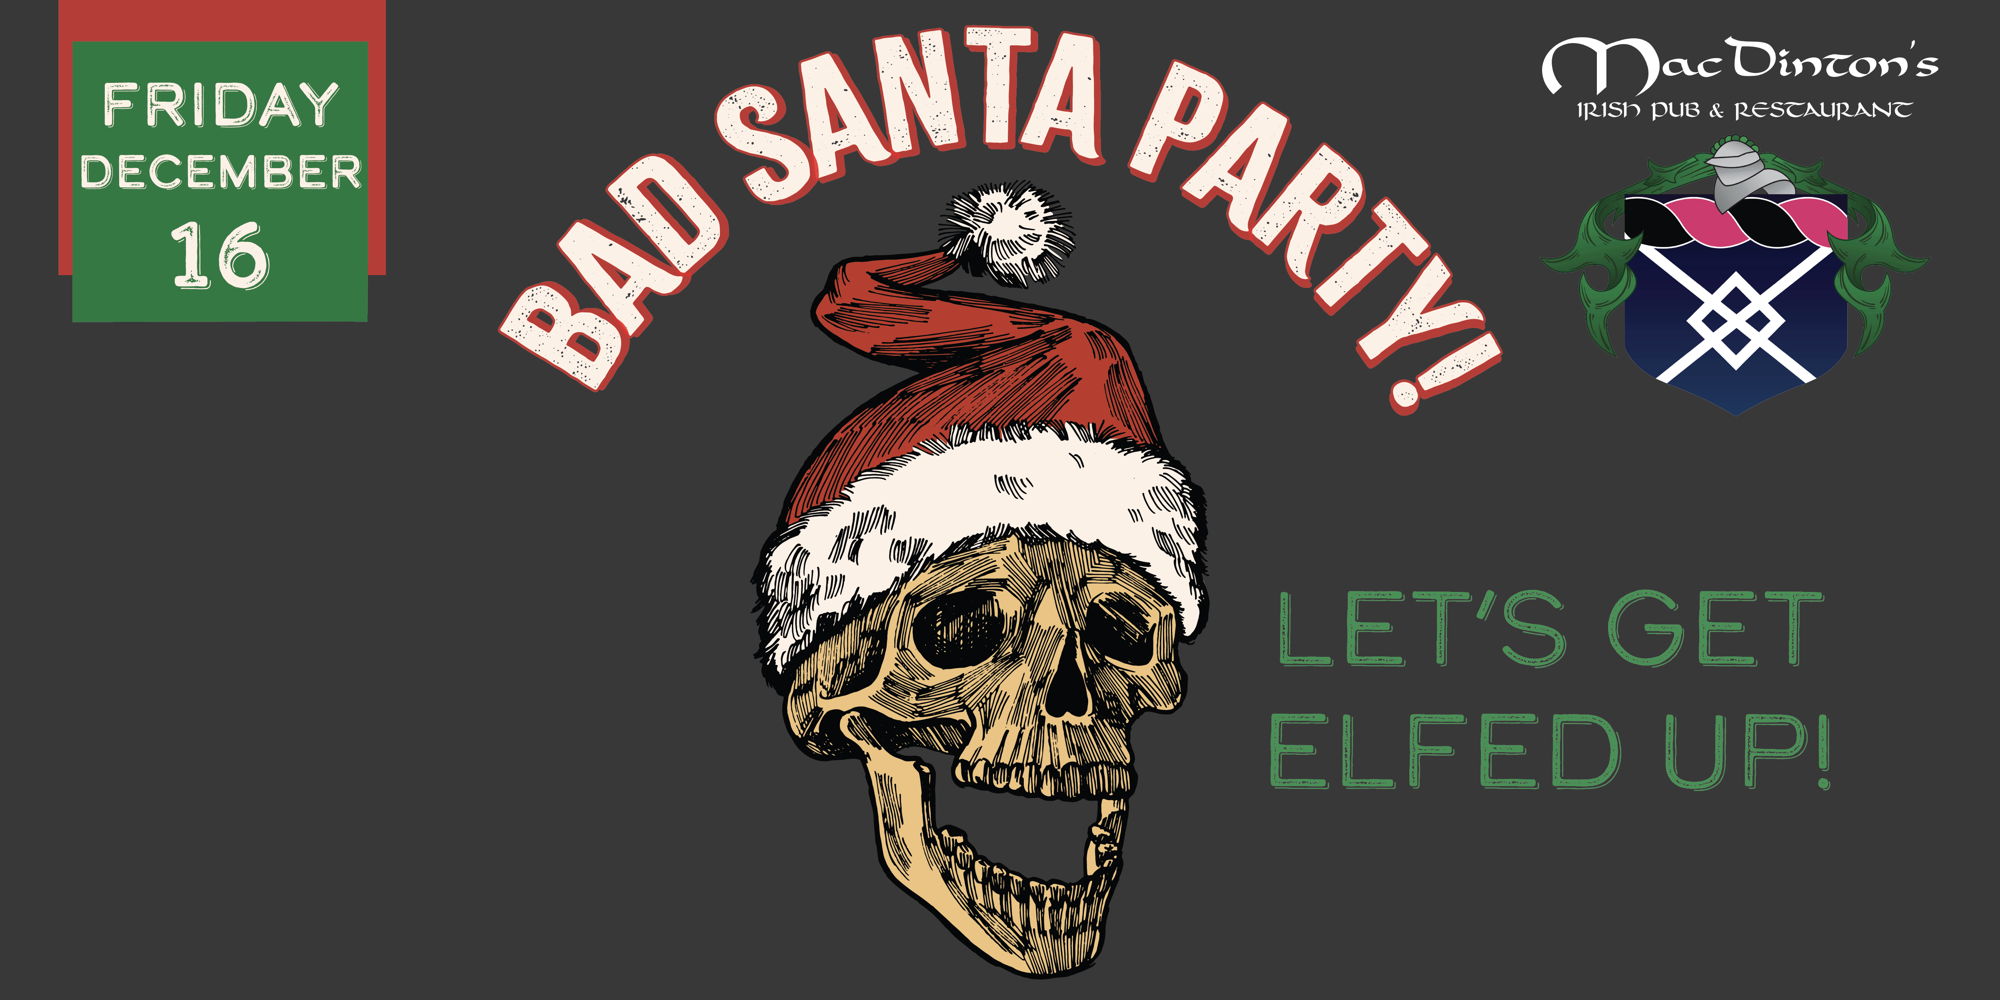 Bad Santa Party! promotional image